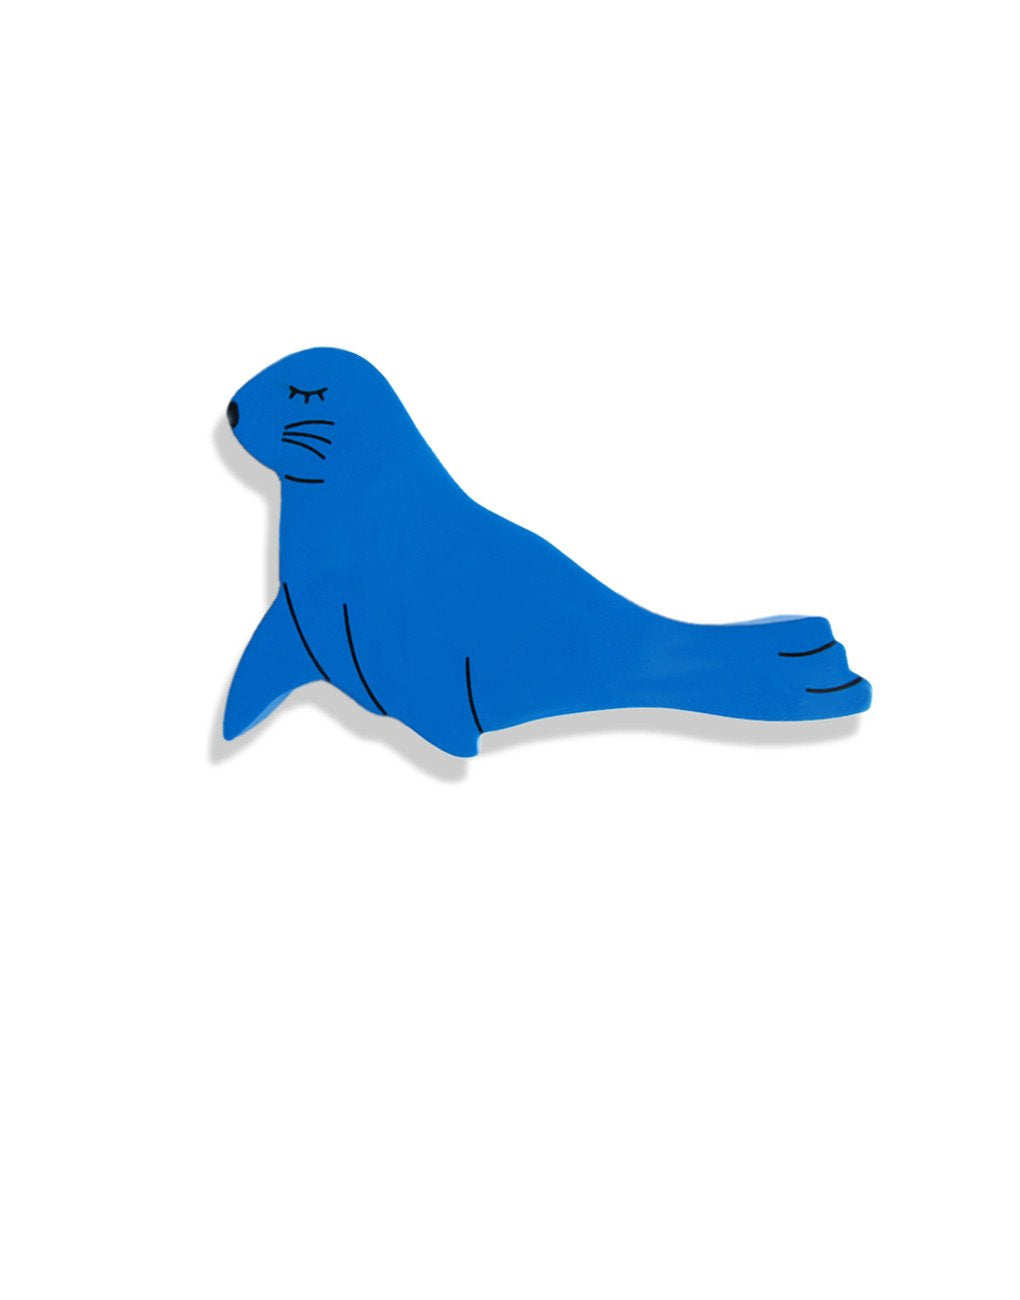 SEAL - Wooden Animal Magnet